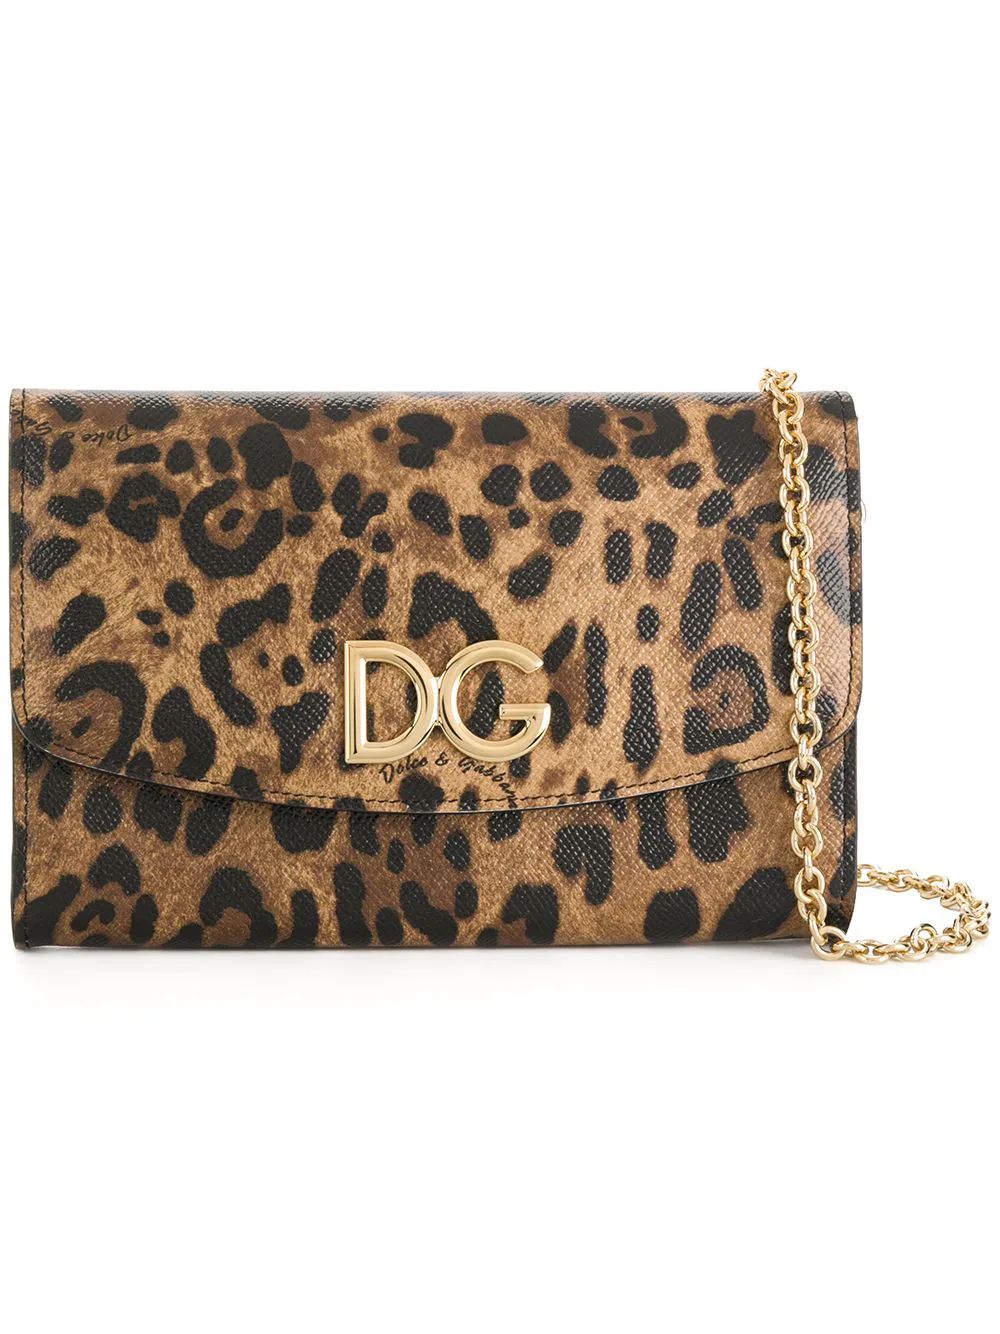 Dolce & Gabbana leopard printed purse - Multicolour | FarFetch US